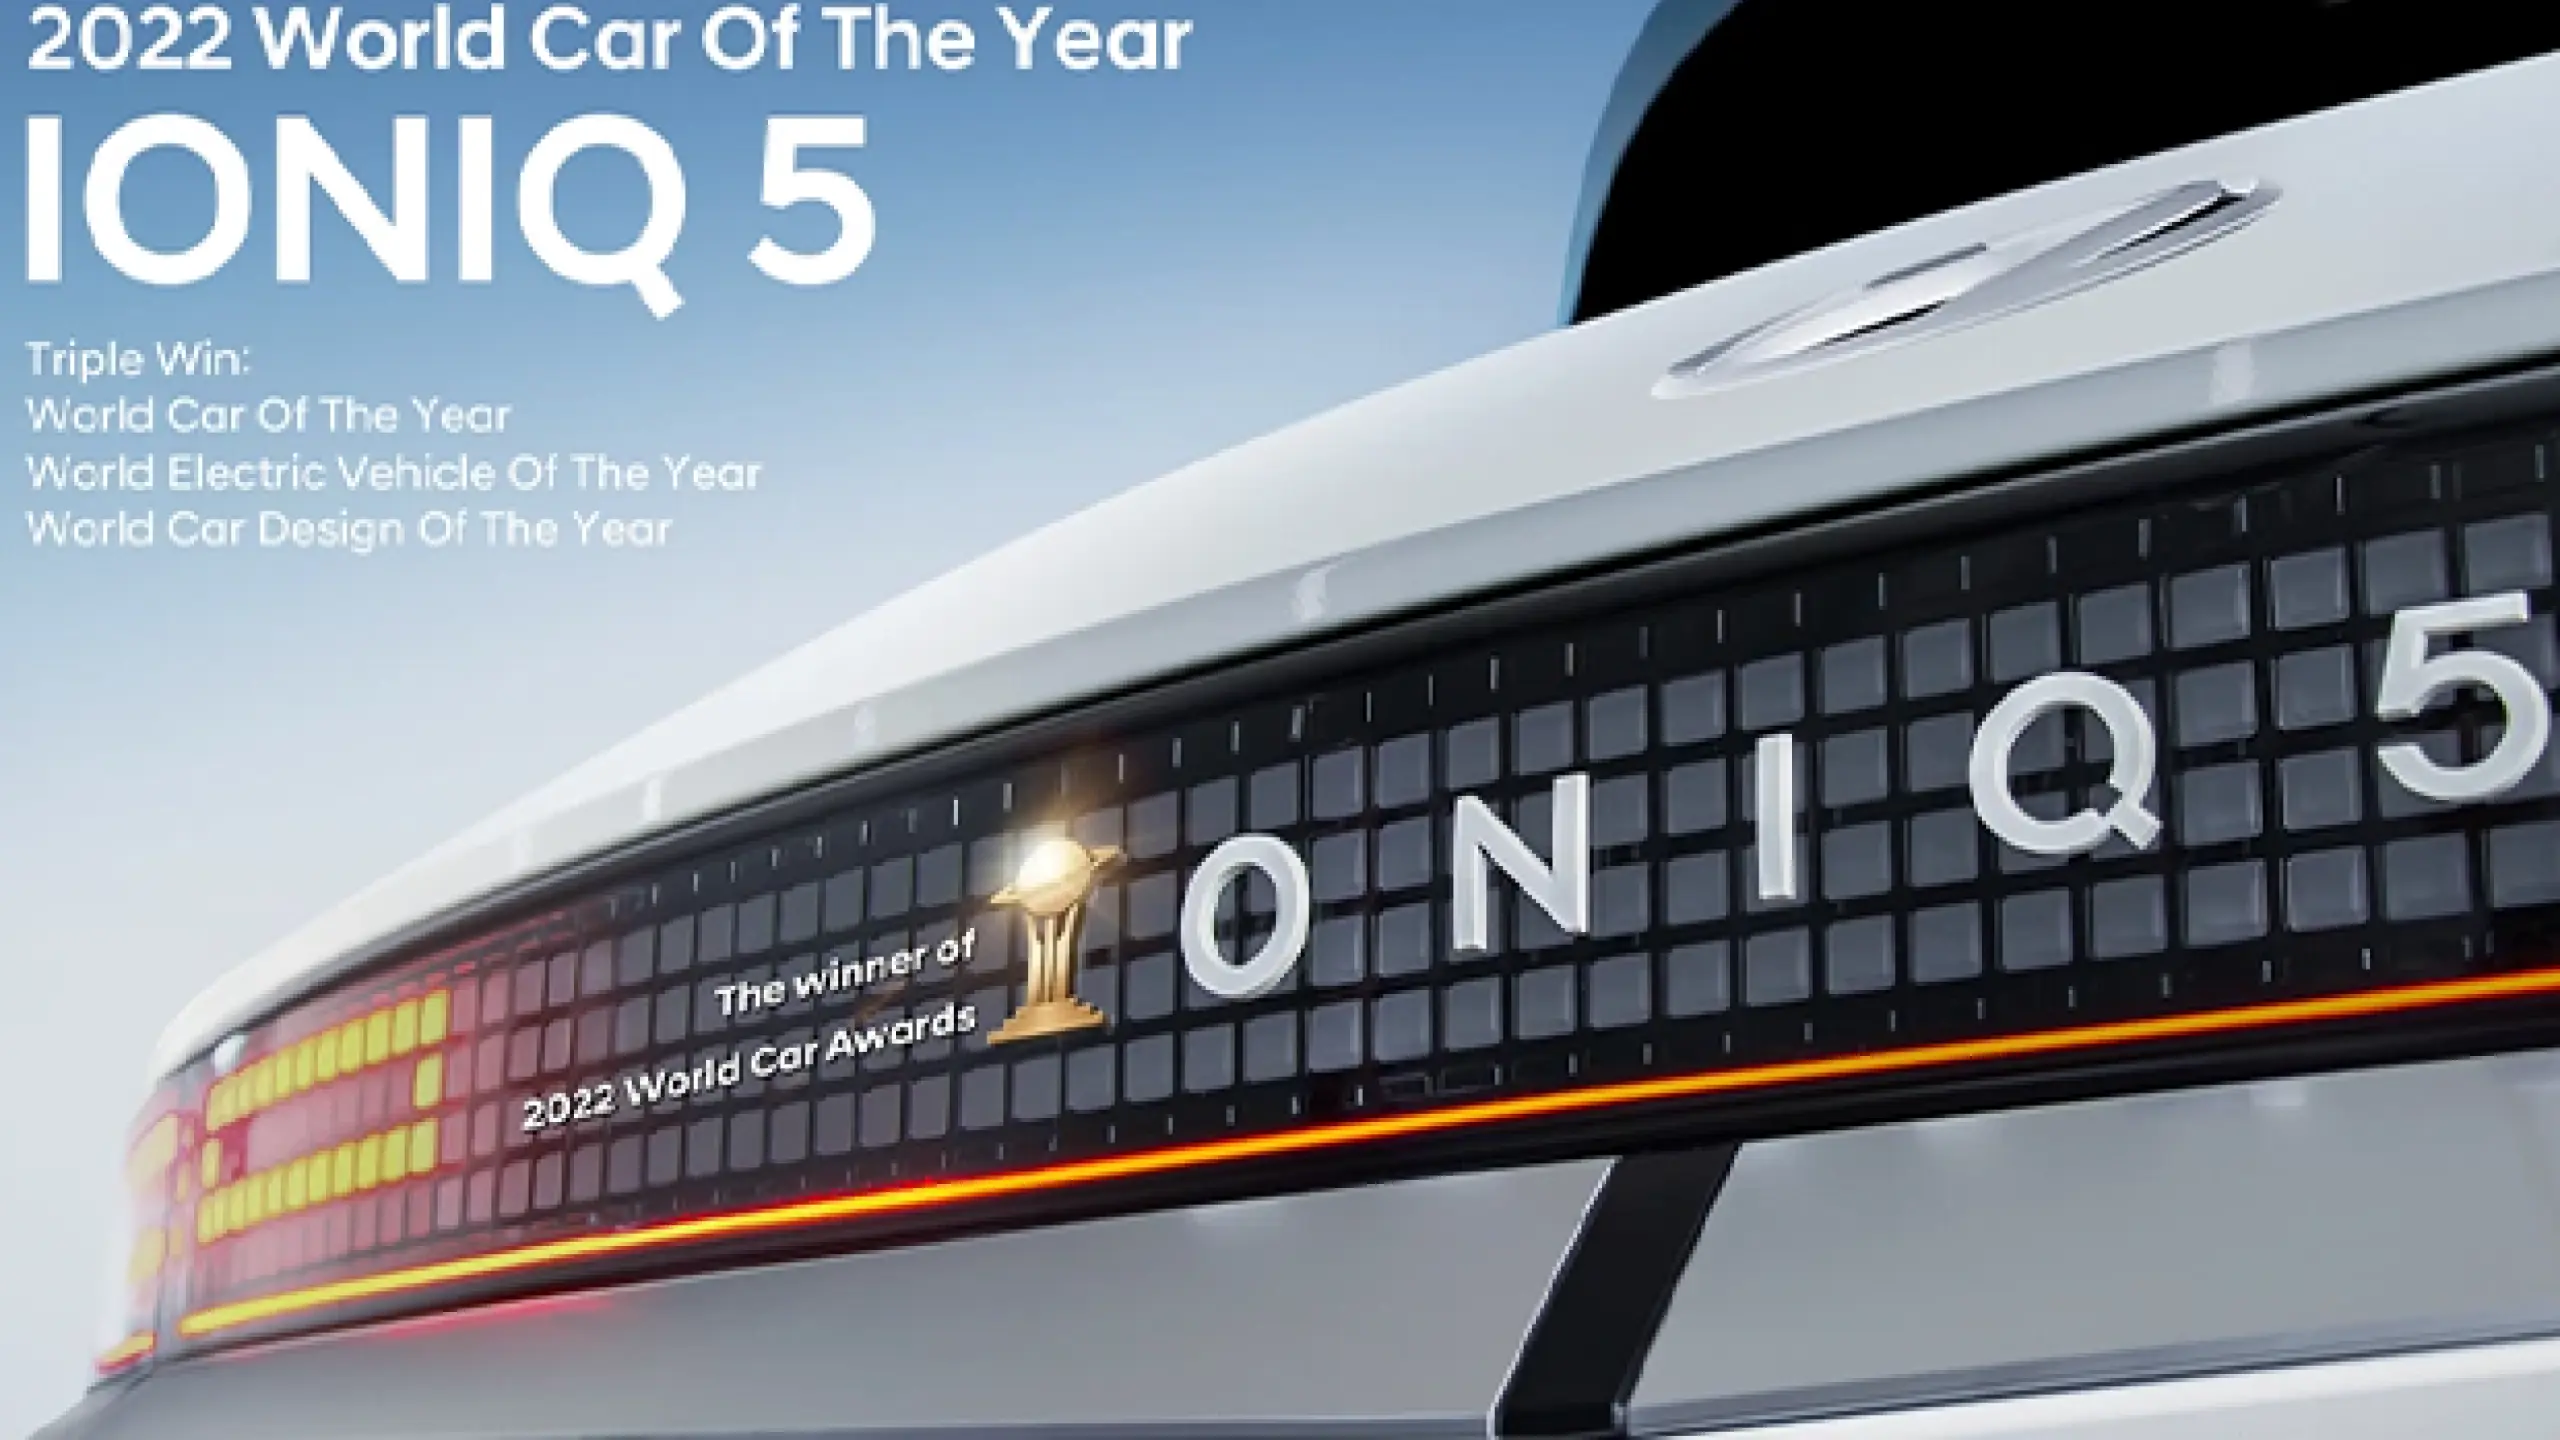 Hyundai IONIQ 5: World Car of the Year, World Electric Vehicle of the Year, World Car Design of the Year 2022